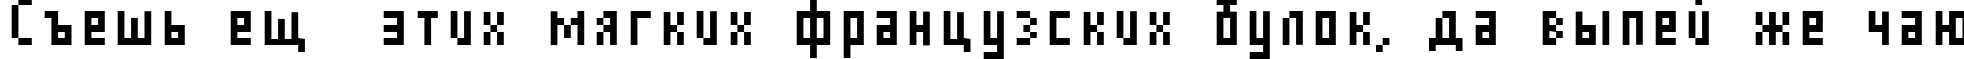 Пример написания шрифтом AuX DotBitC Cond текста на русском